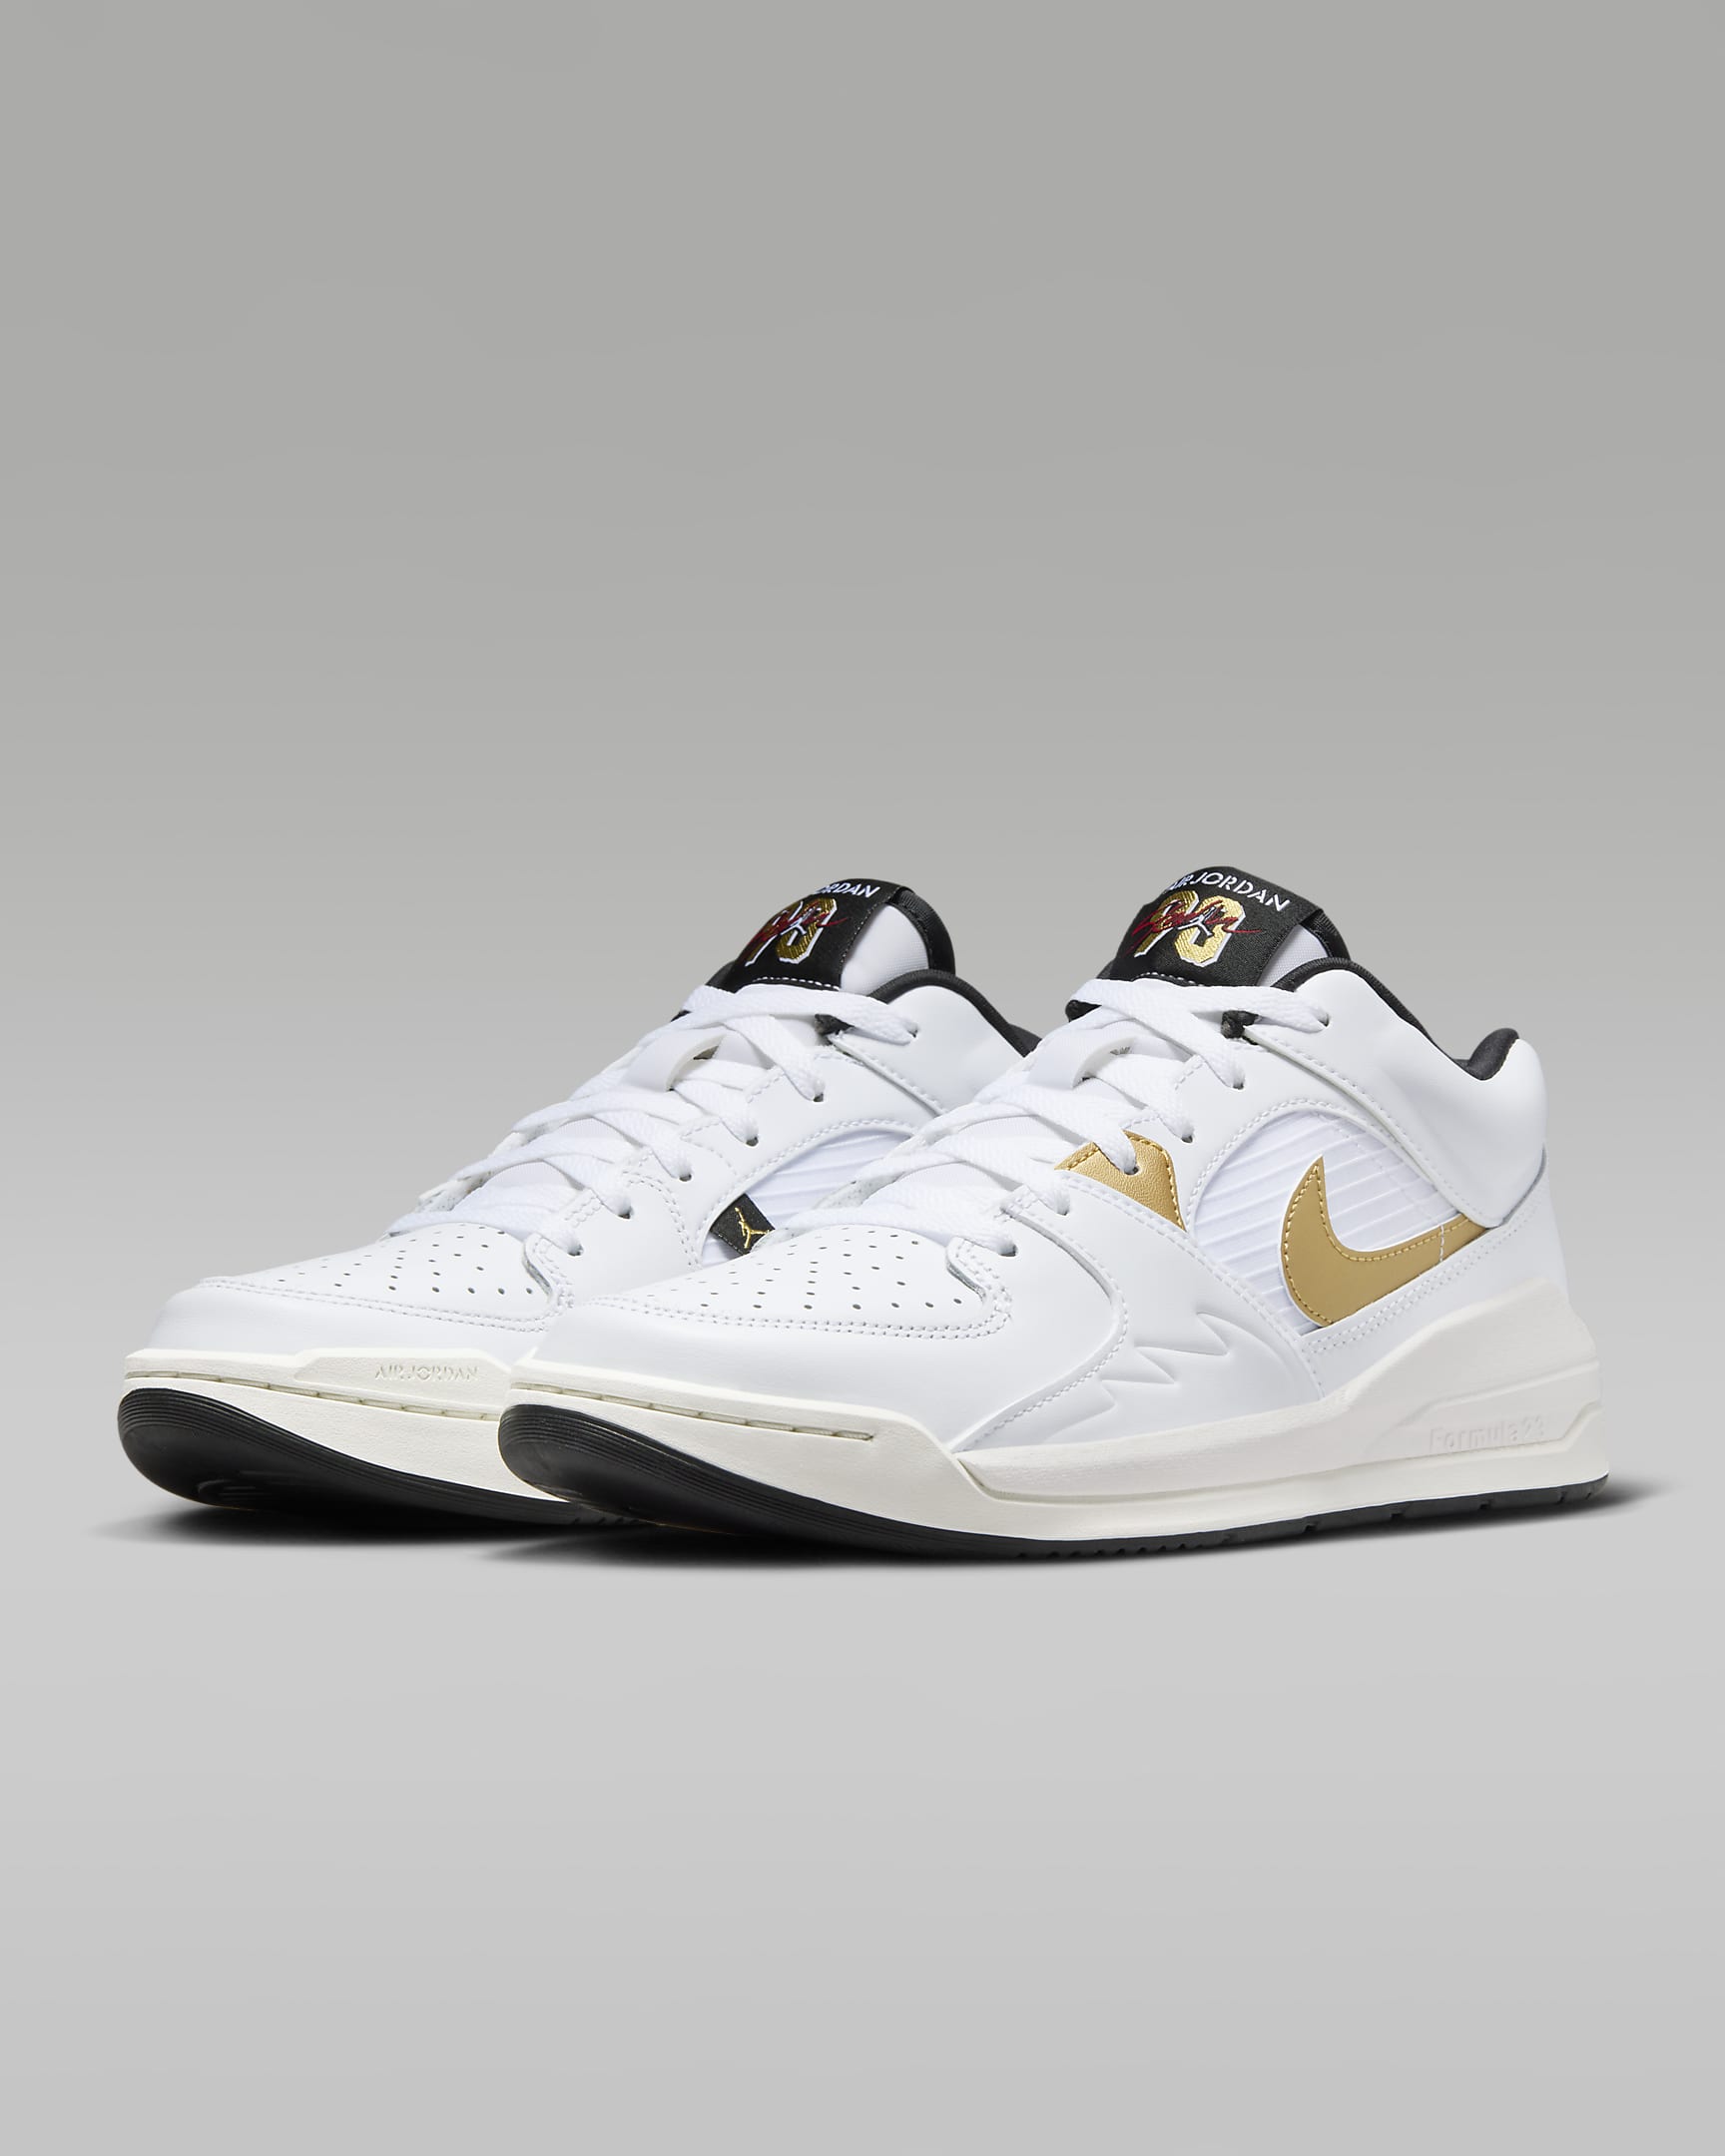 Nike Men's Air Jordan Stadium Shoes (White/Gold or White/Clover) $69 + Free Shipping